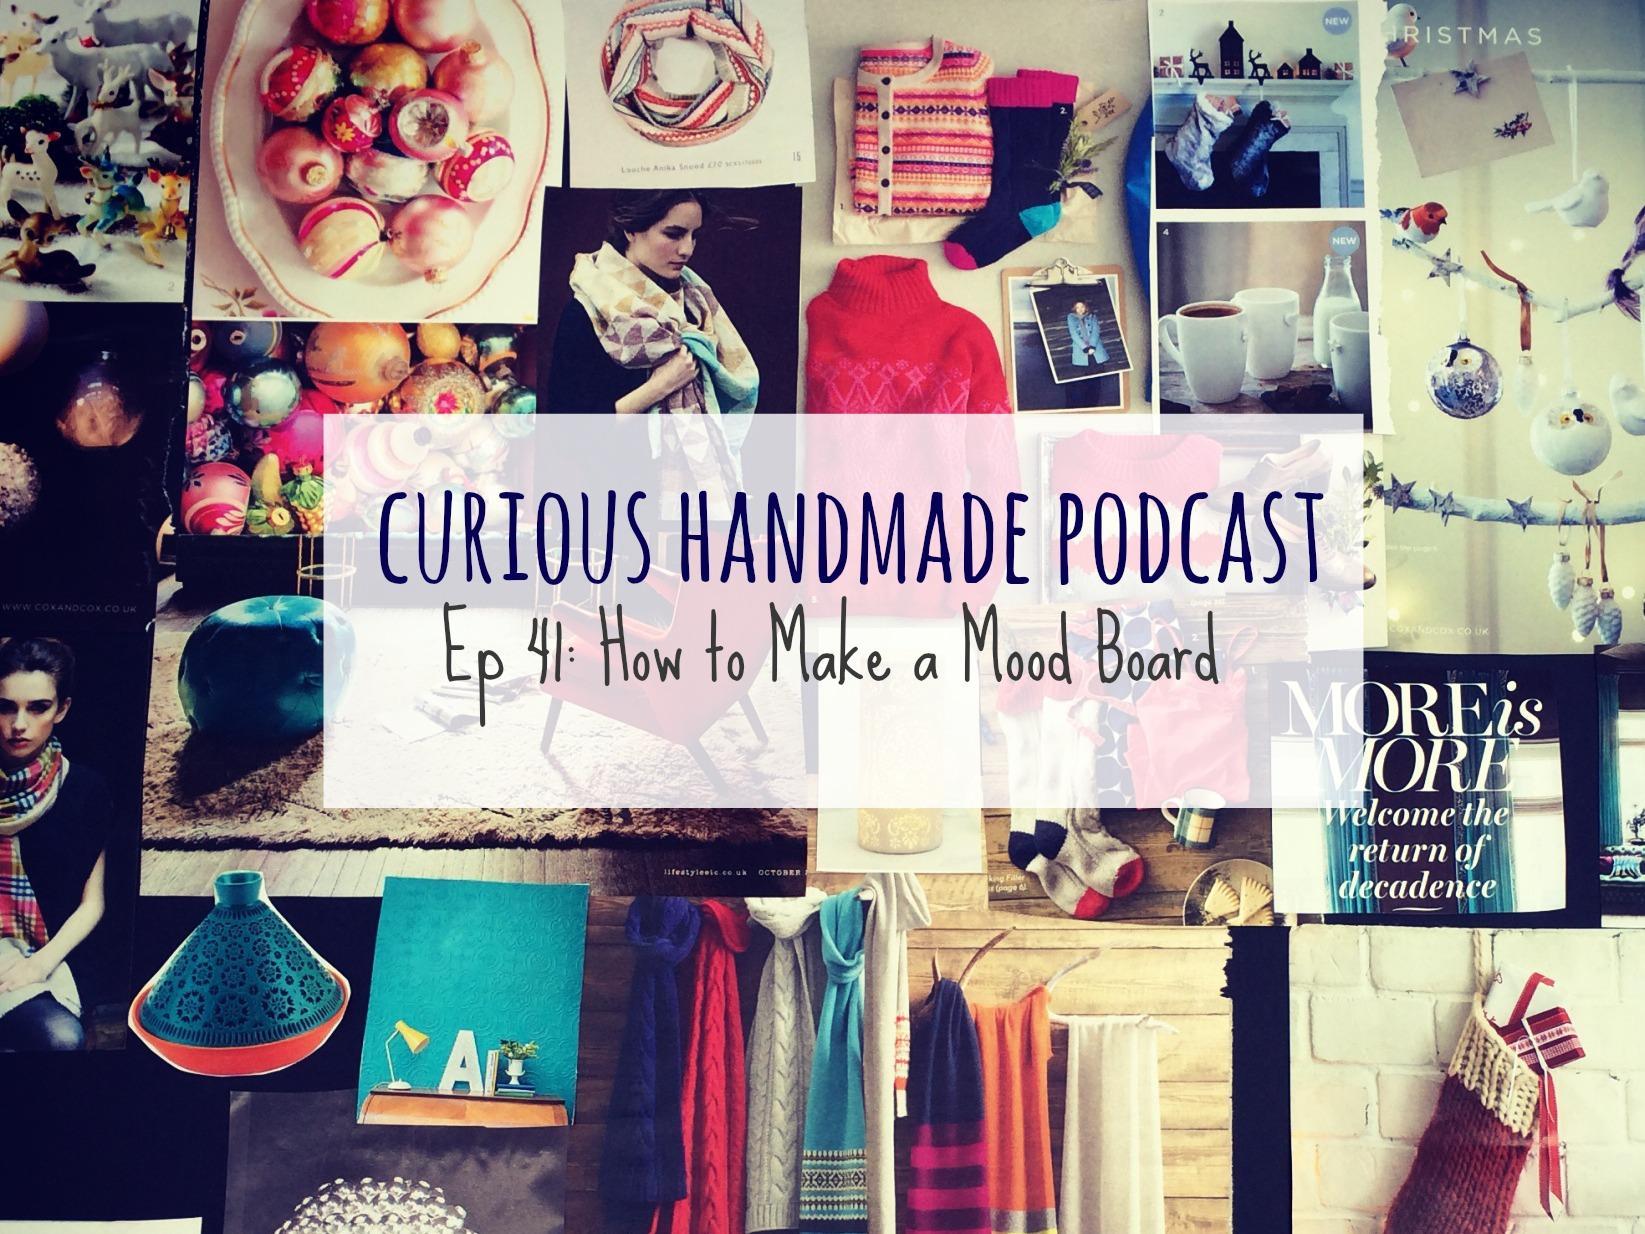 Curious Handmade Podcast ep 41